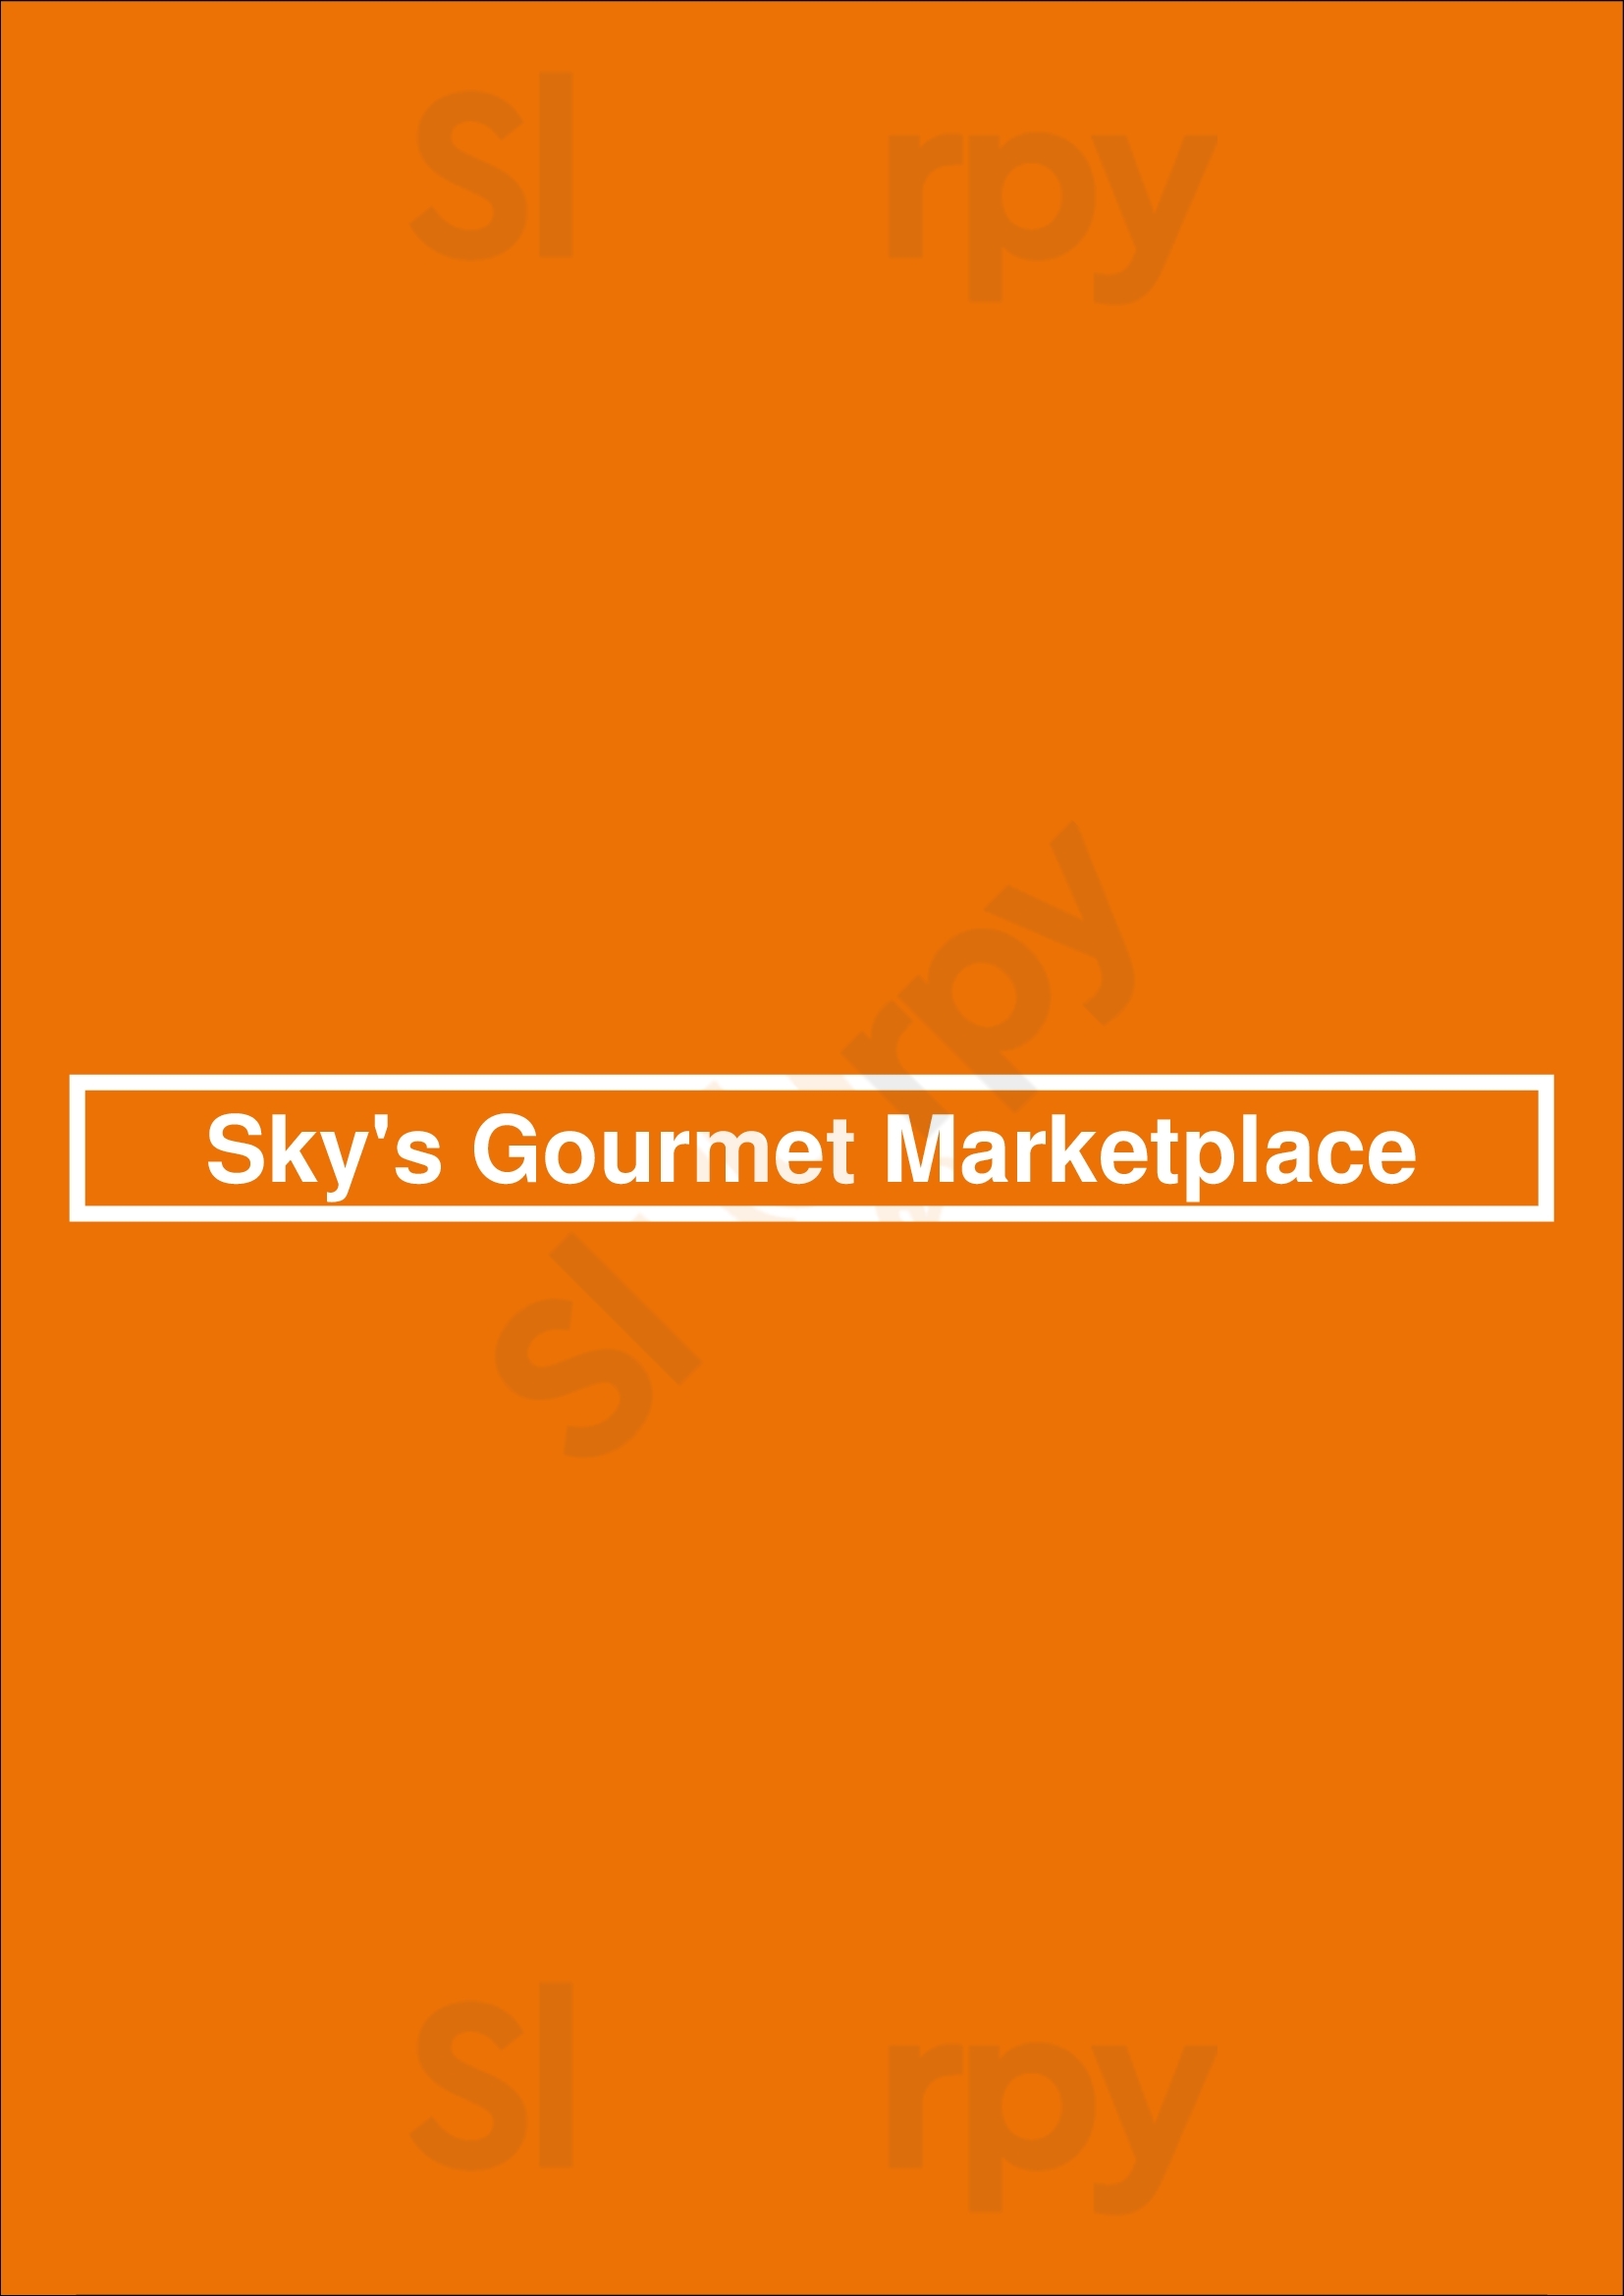 Sky's Gourmet Marketplace Marina del Rey Menu - 1